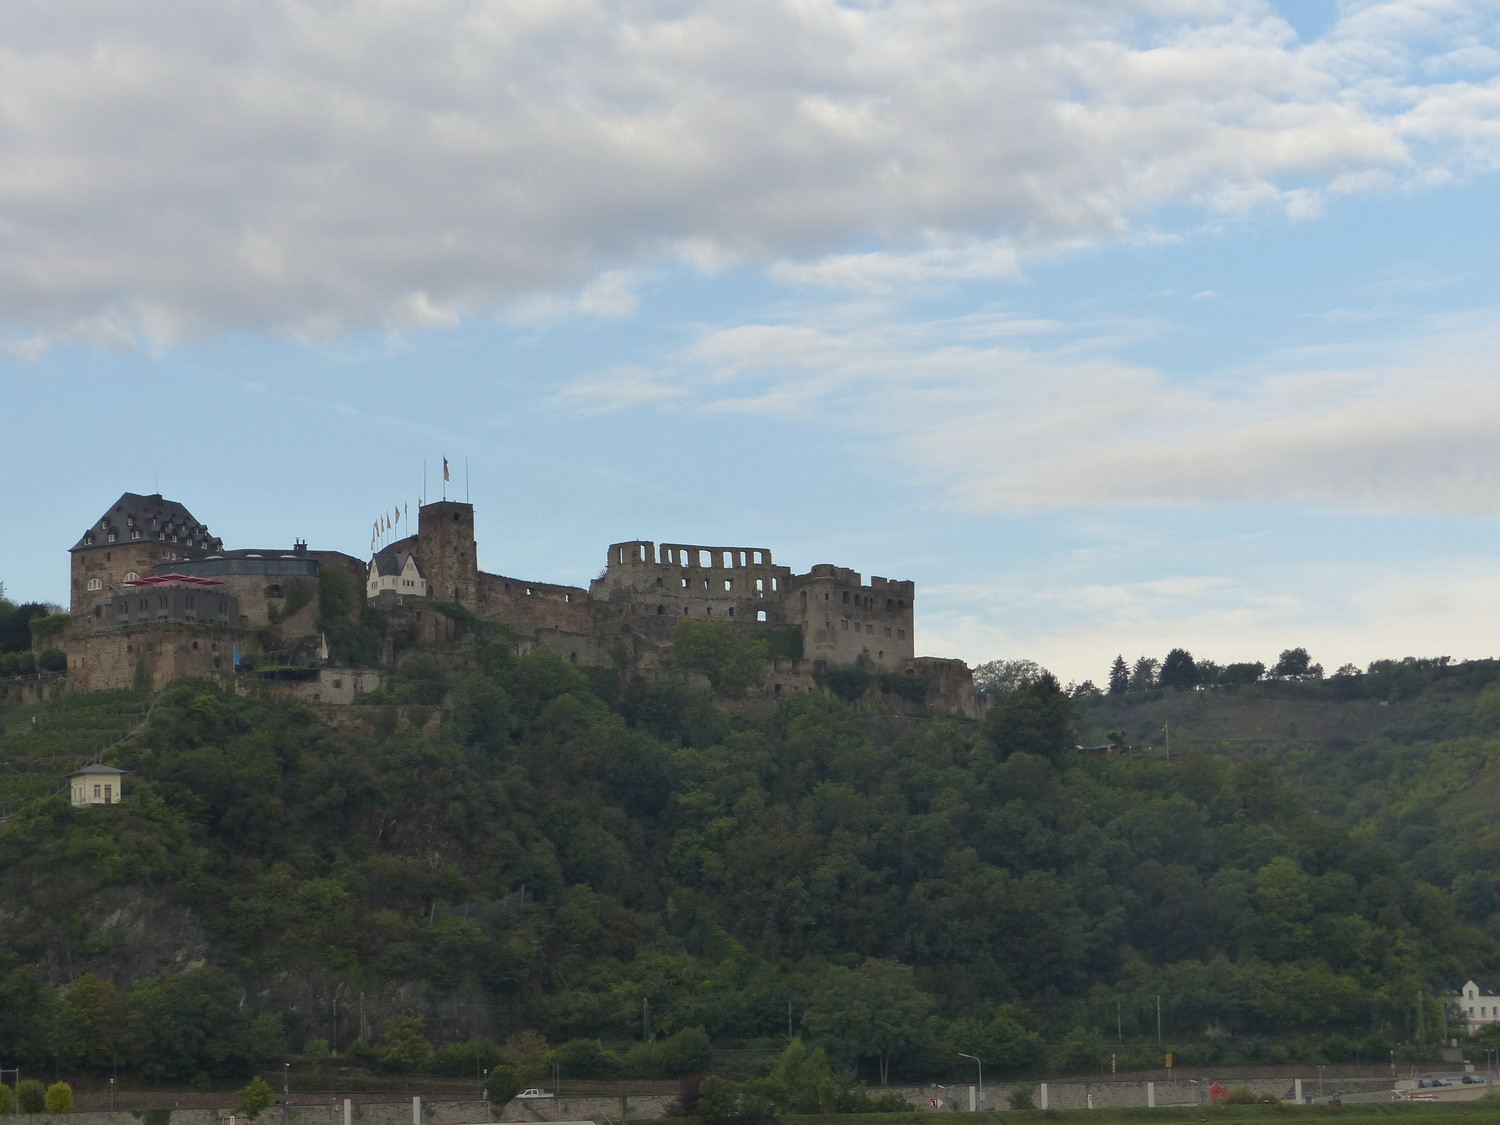 Burg Rheinfeld in St. Goar